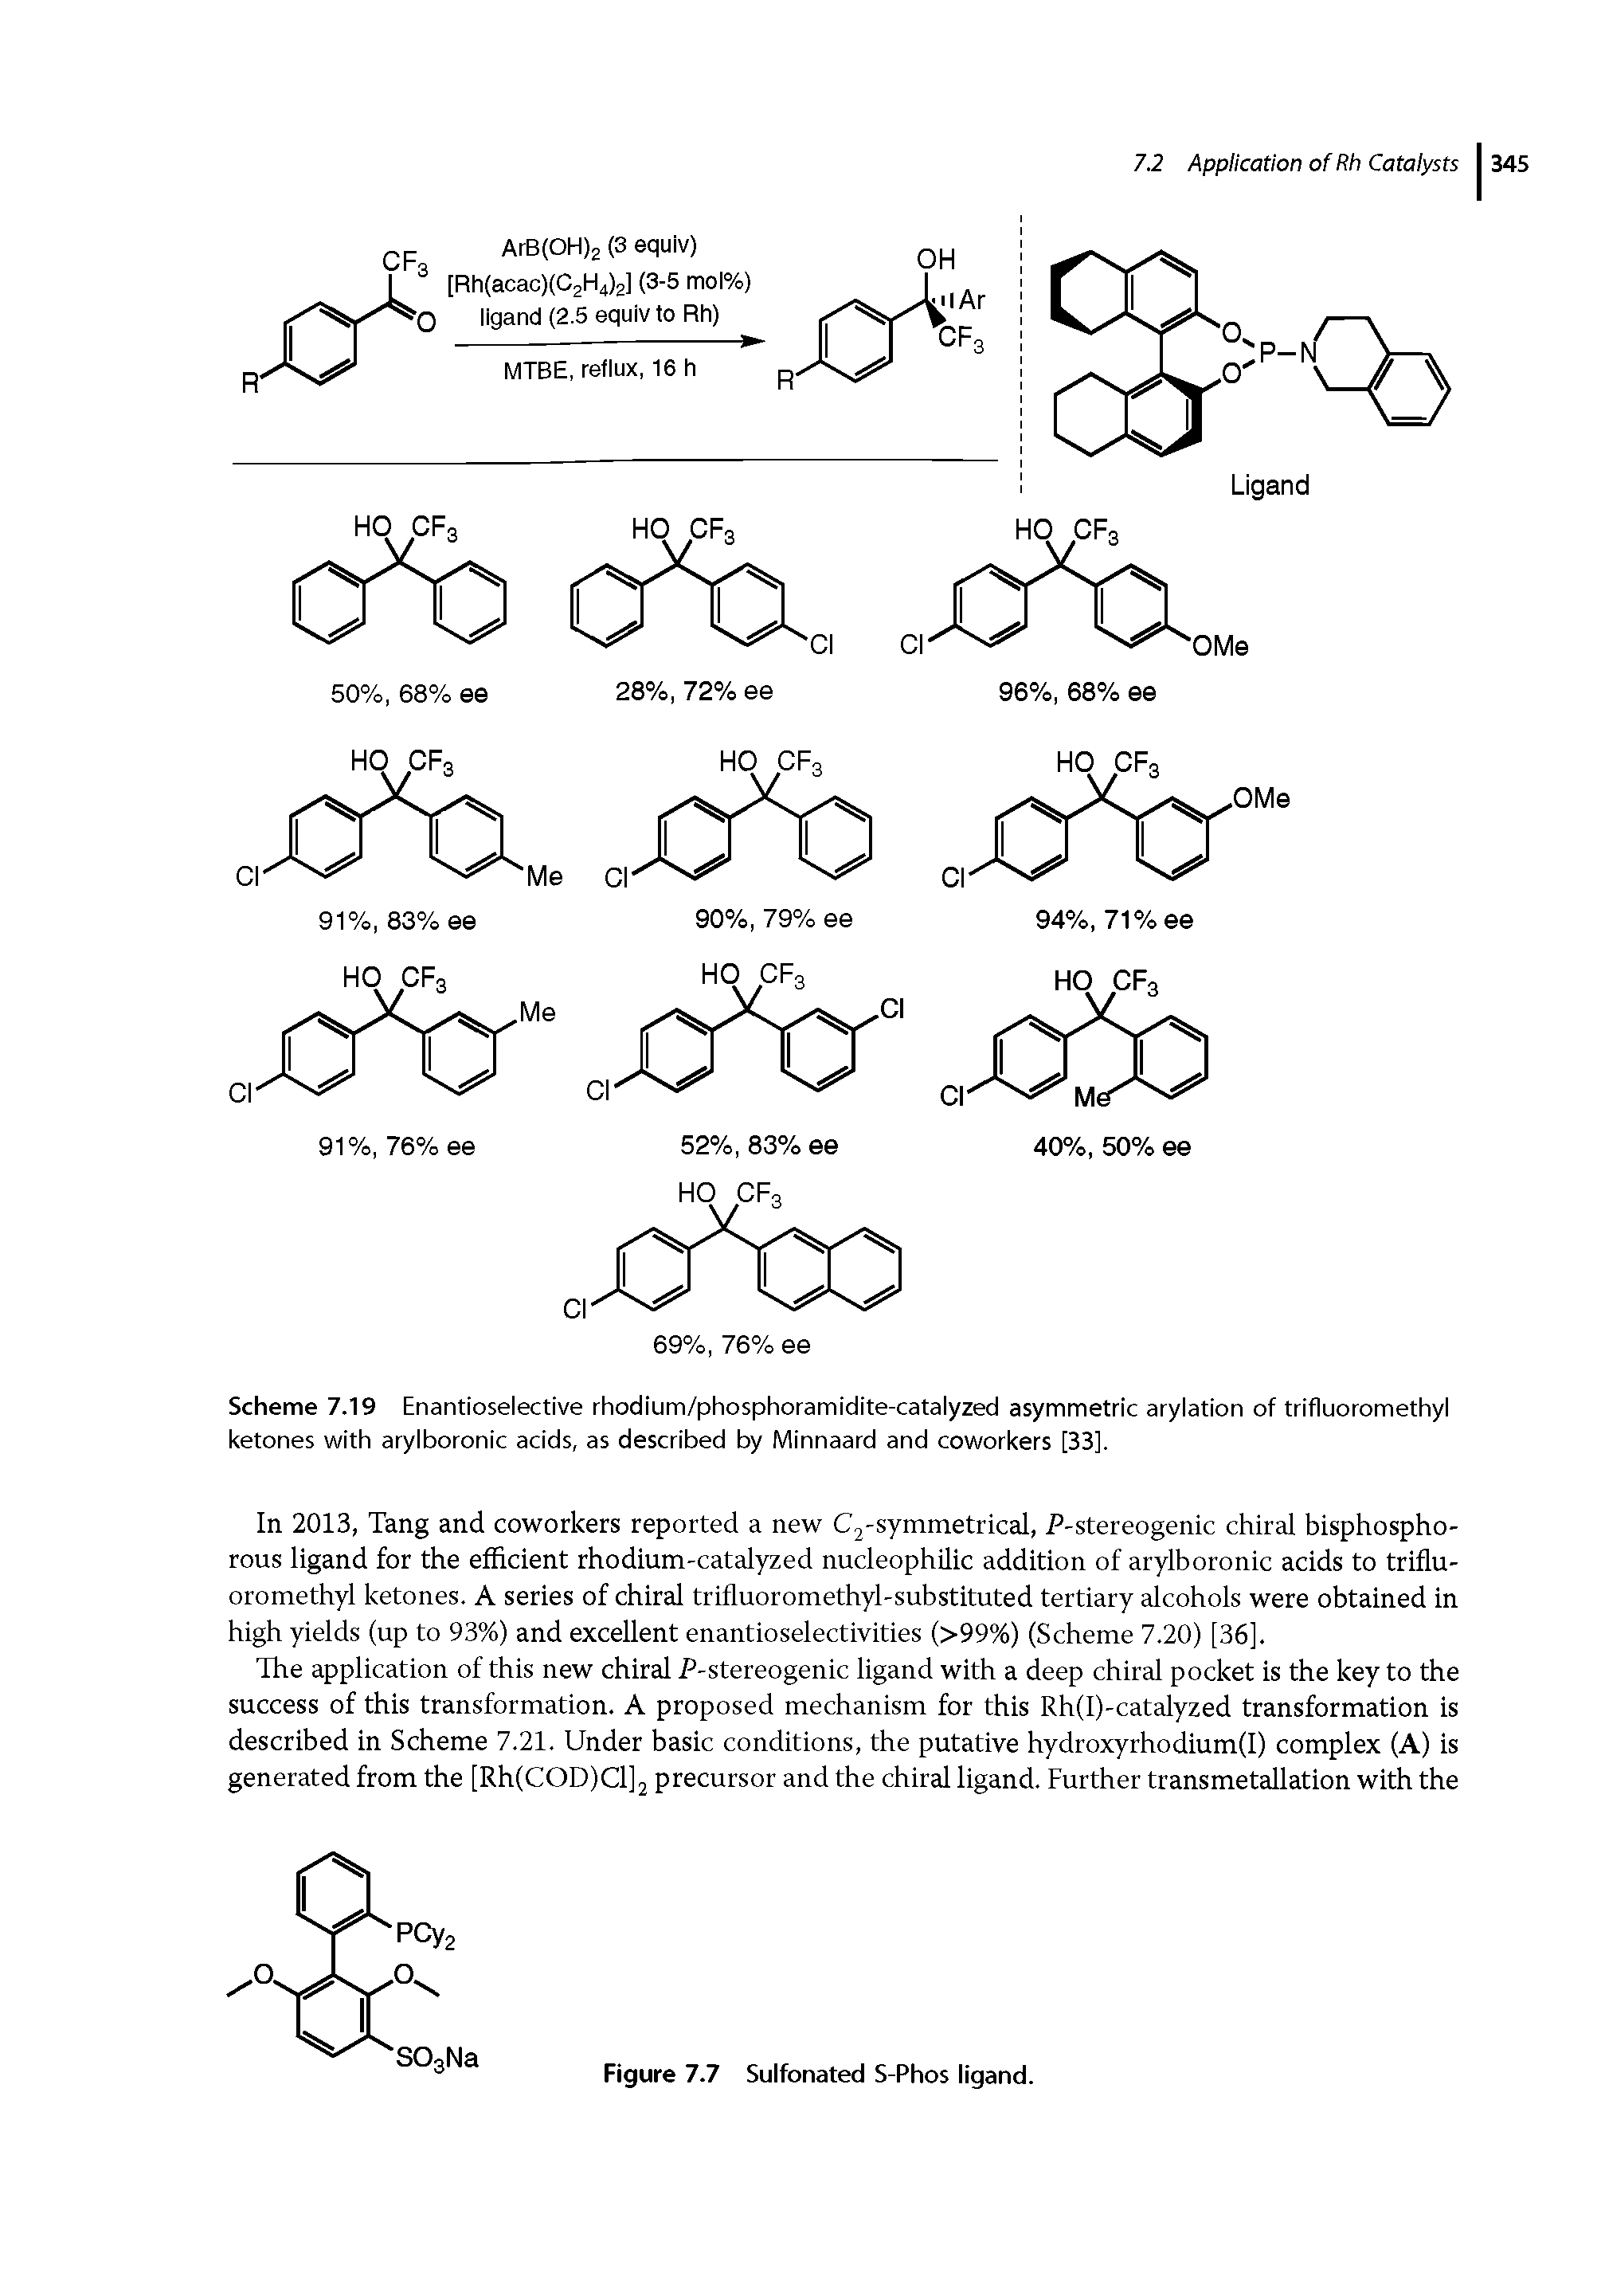 Scheme 7.19 Enantioselective rhodium/phosphoramidite-catalyzed asymmetric arylation of trifluoromethyl ketones with arylboronic acids, as described by Minnaard and coworkers [33].